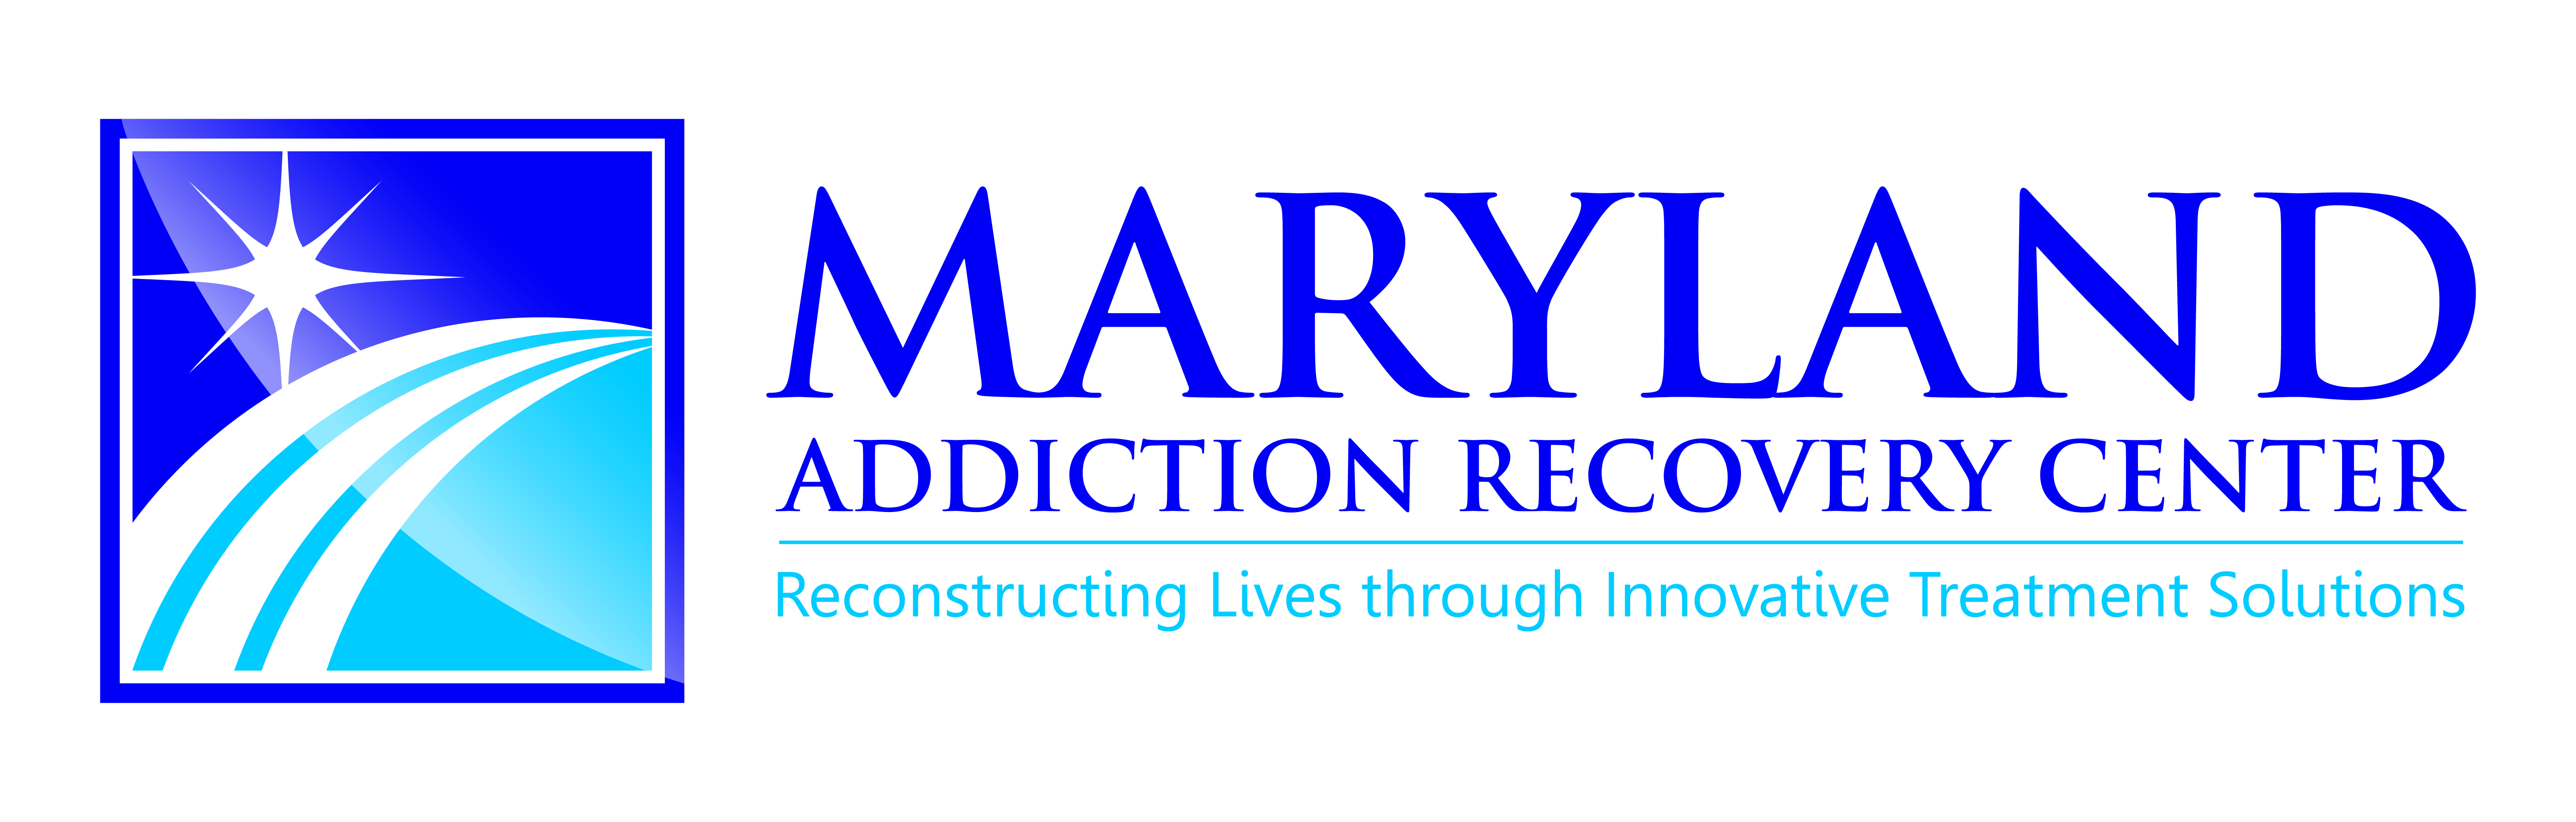 MARYLAND ADDICTION RECOVERY CENTER